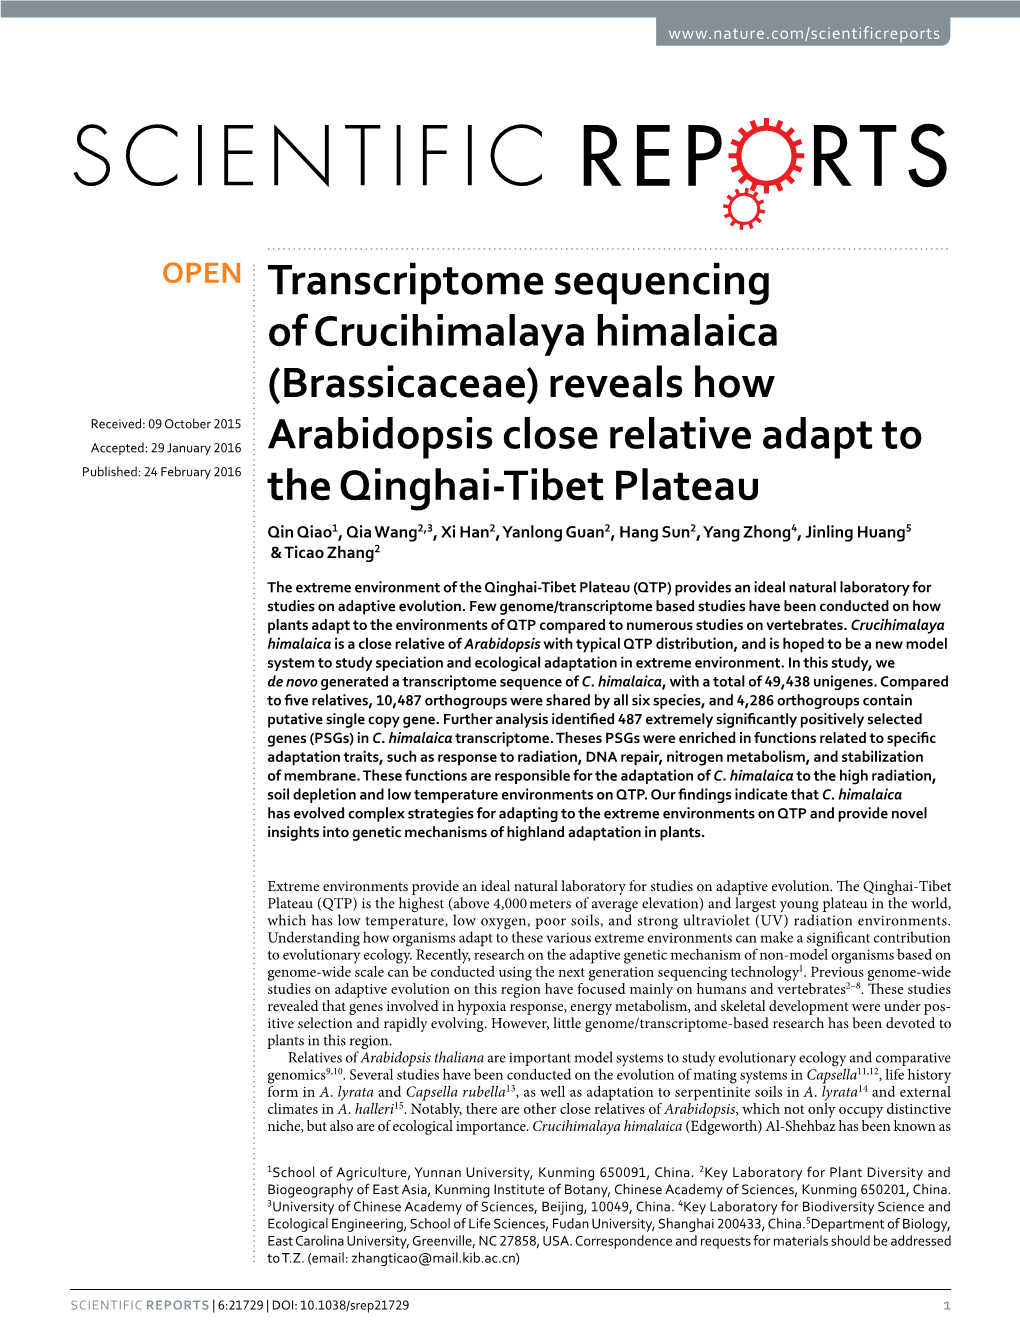 Transcriptome Sequencing of Crucihimalaya Himalaica